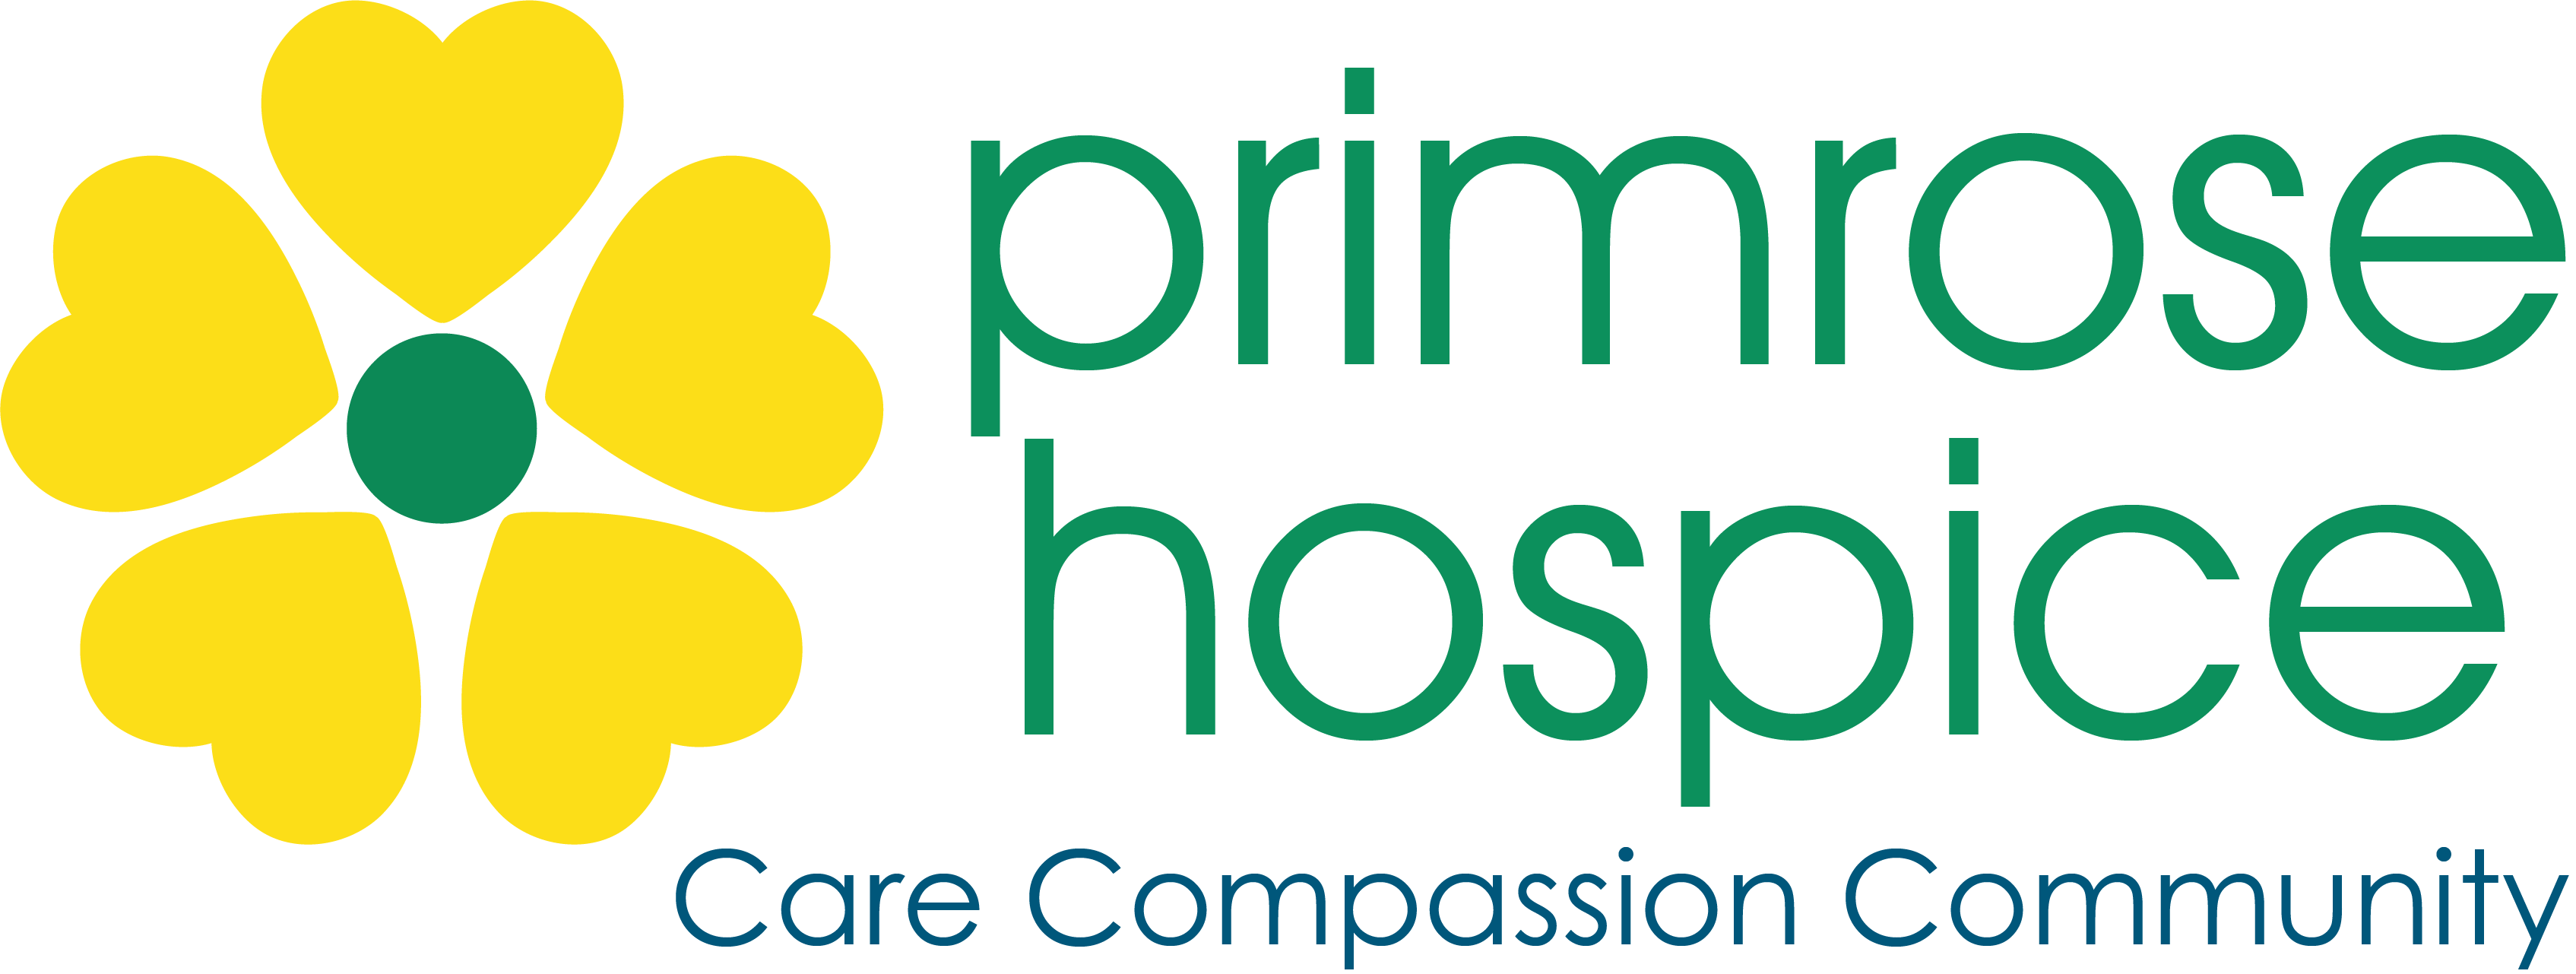 Primrose-Logo-Strapline